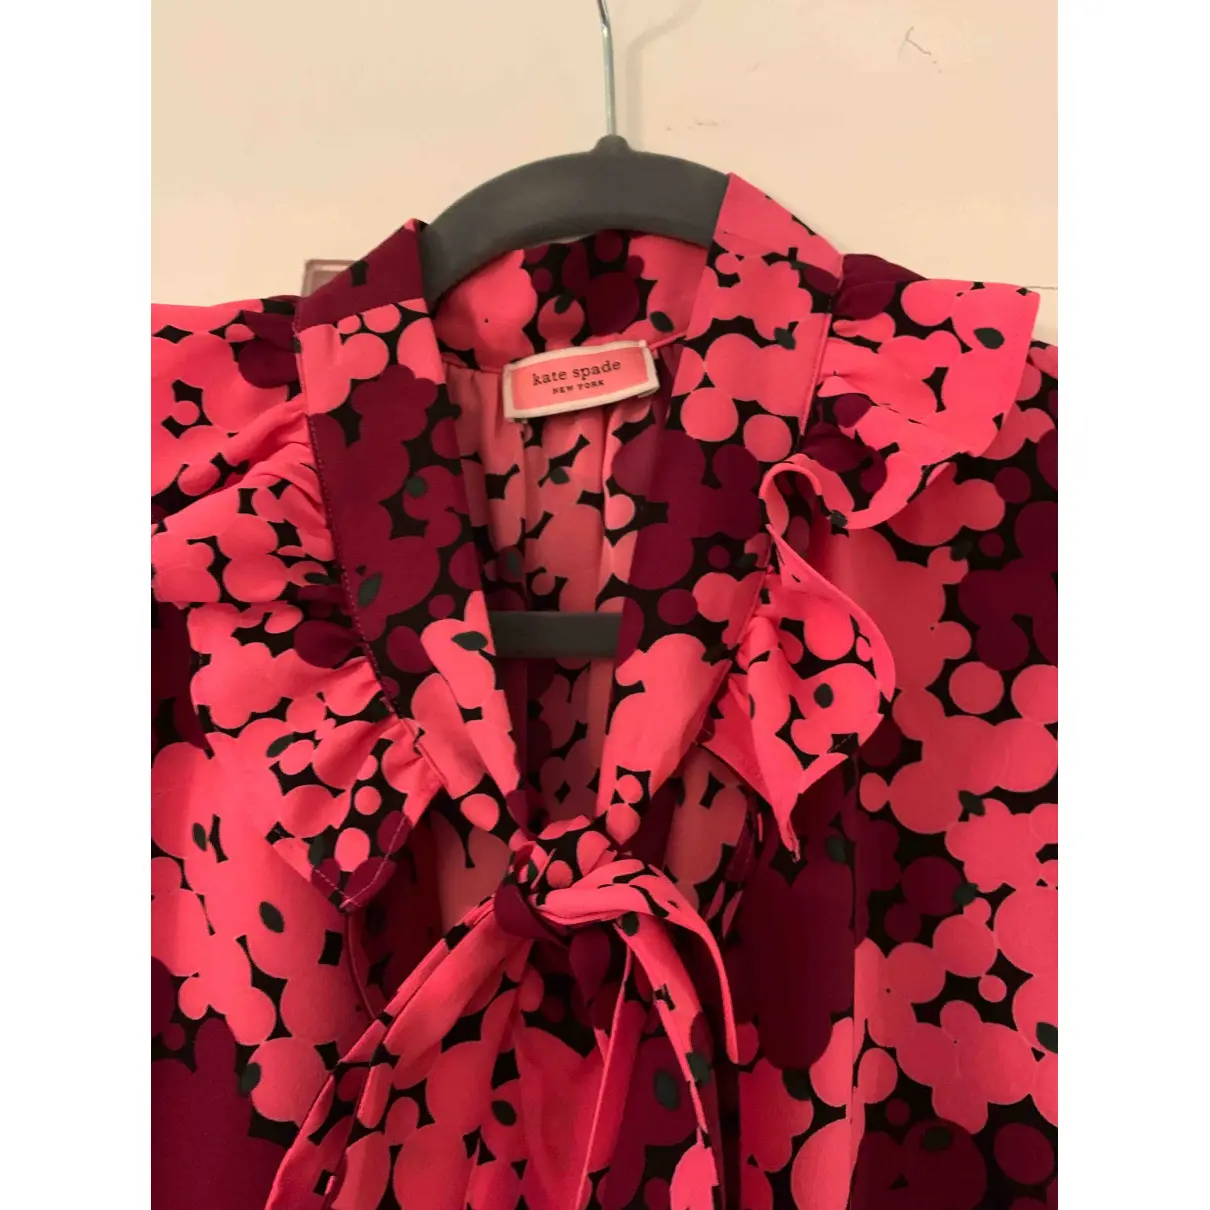 Buy Kate Spade Pink Polyester Top online